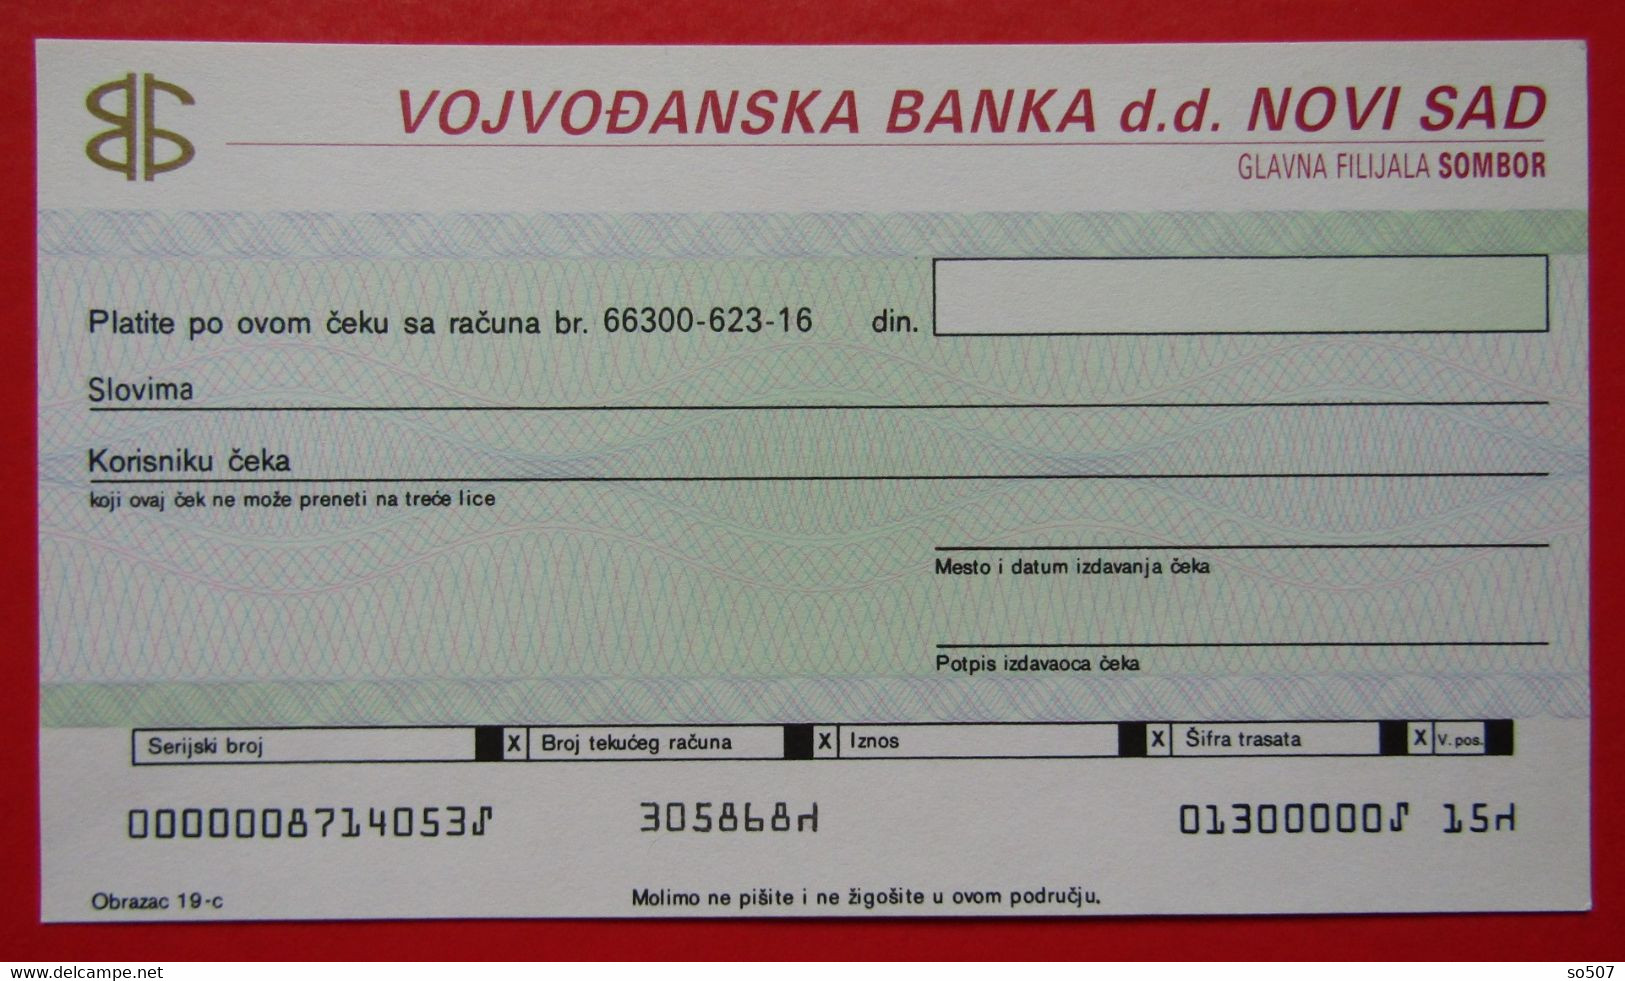 X1- Check, Cheque - Vojvodjanska Banka D. D. Novi Sad - Main Branch Office Bank In Sombor, Yugoslavia - Chèques & Chèques De Voyage